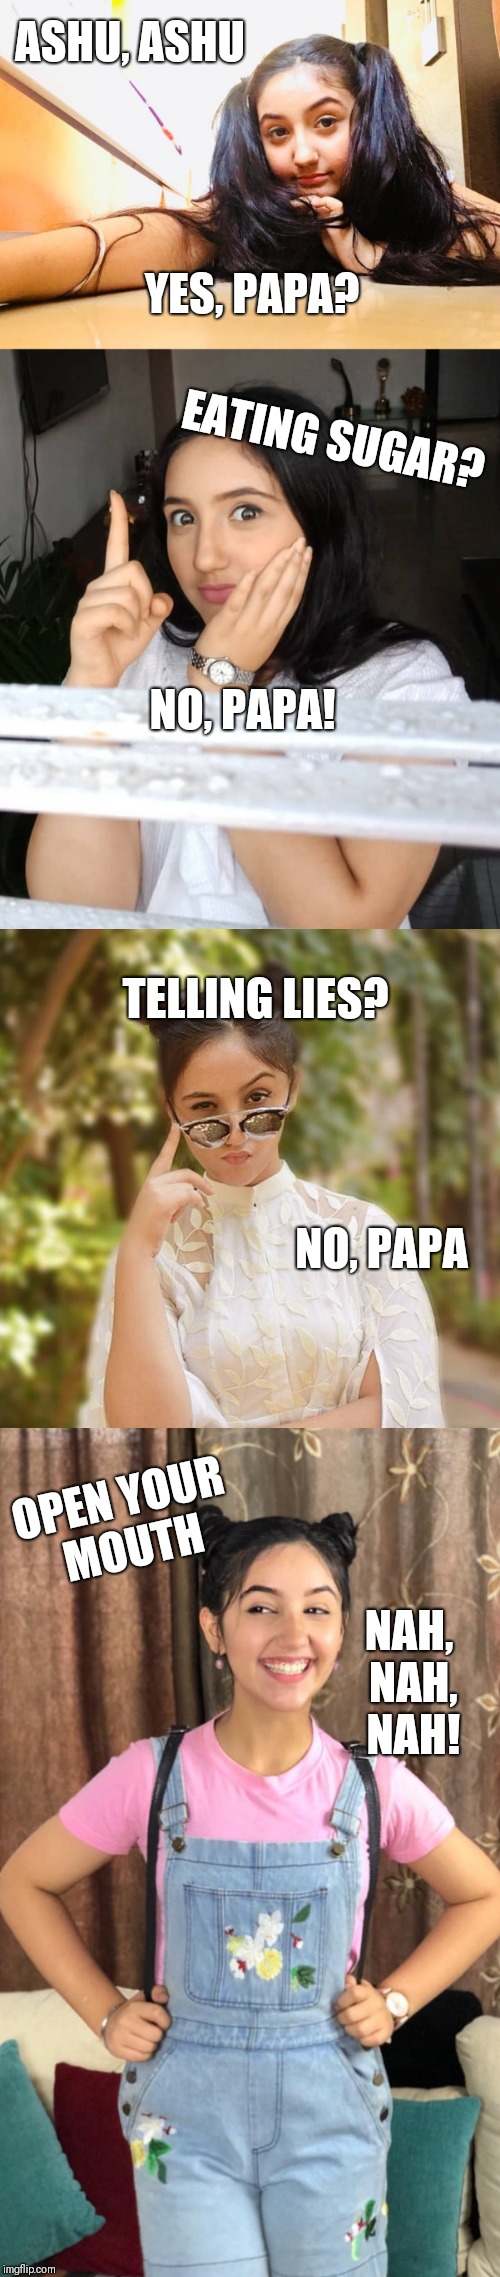 Memes | ASHU, ASHU; YES, PAPA? EATING SUGAR? NO, PAPA! TELLING LIES? NO, PAPA; NAH, NAH, NAH! OPEN YOUR MOUTH | image tagged in funny memes | made w/ Imgflip meme maker